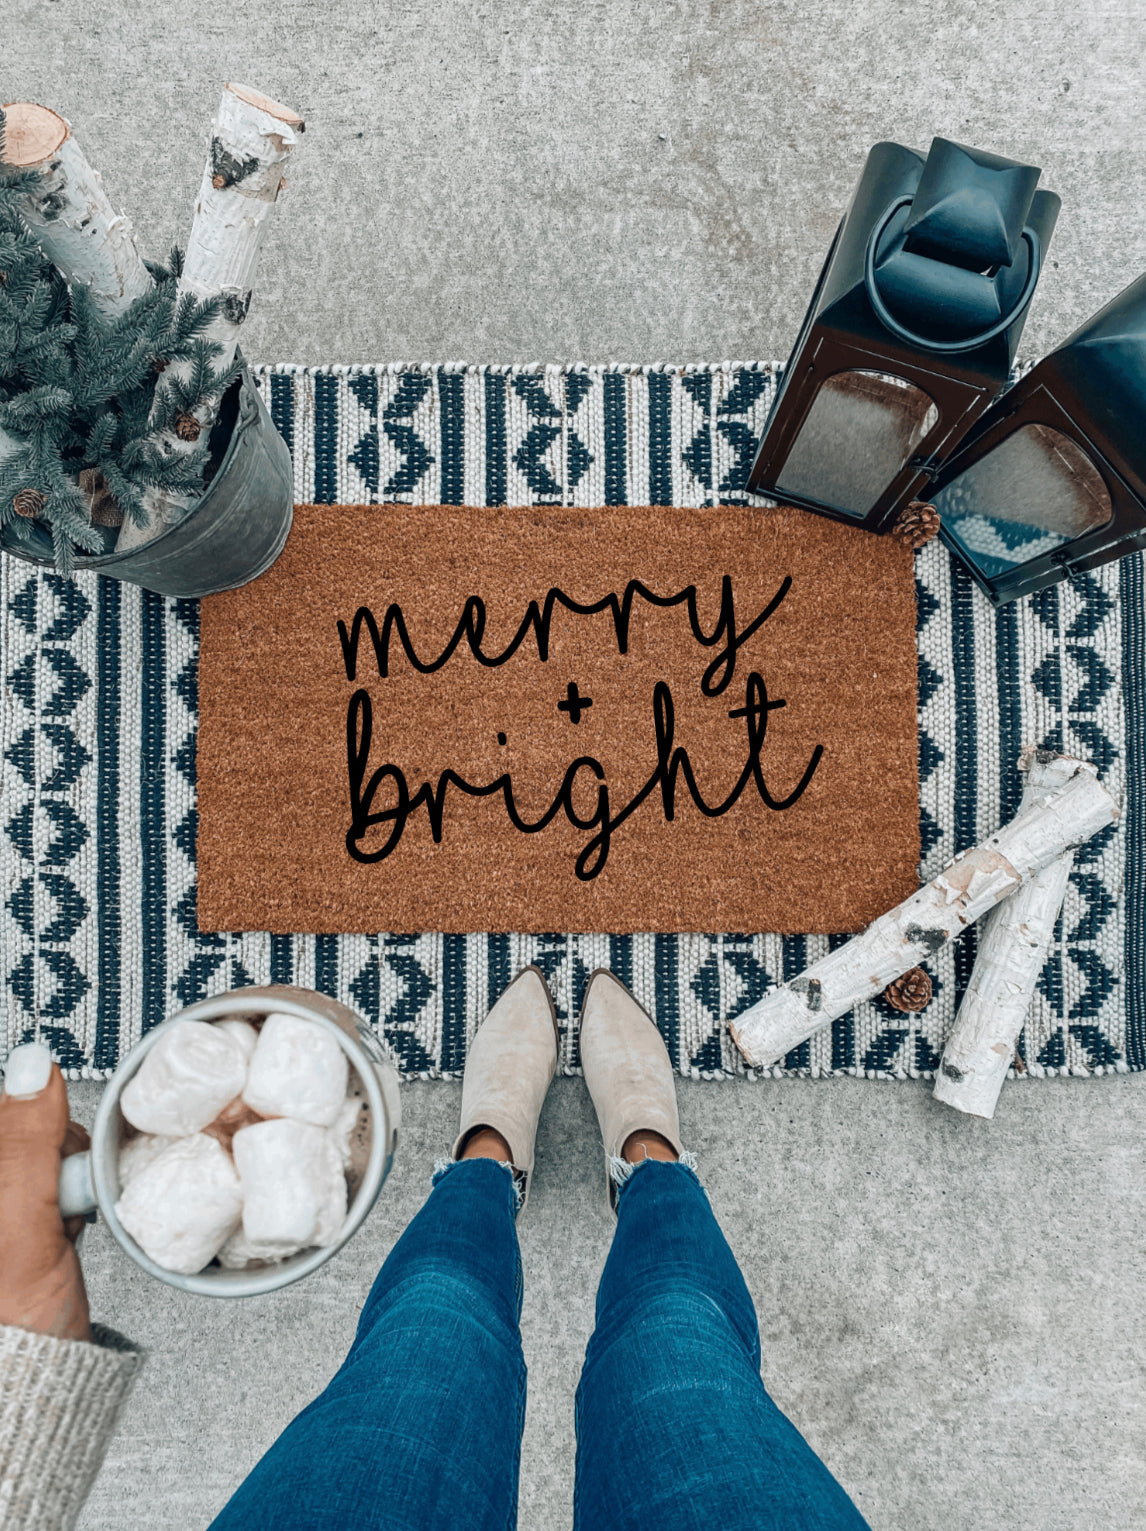 Merry + Bright